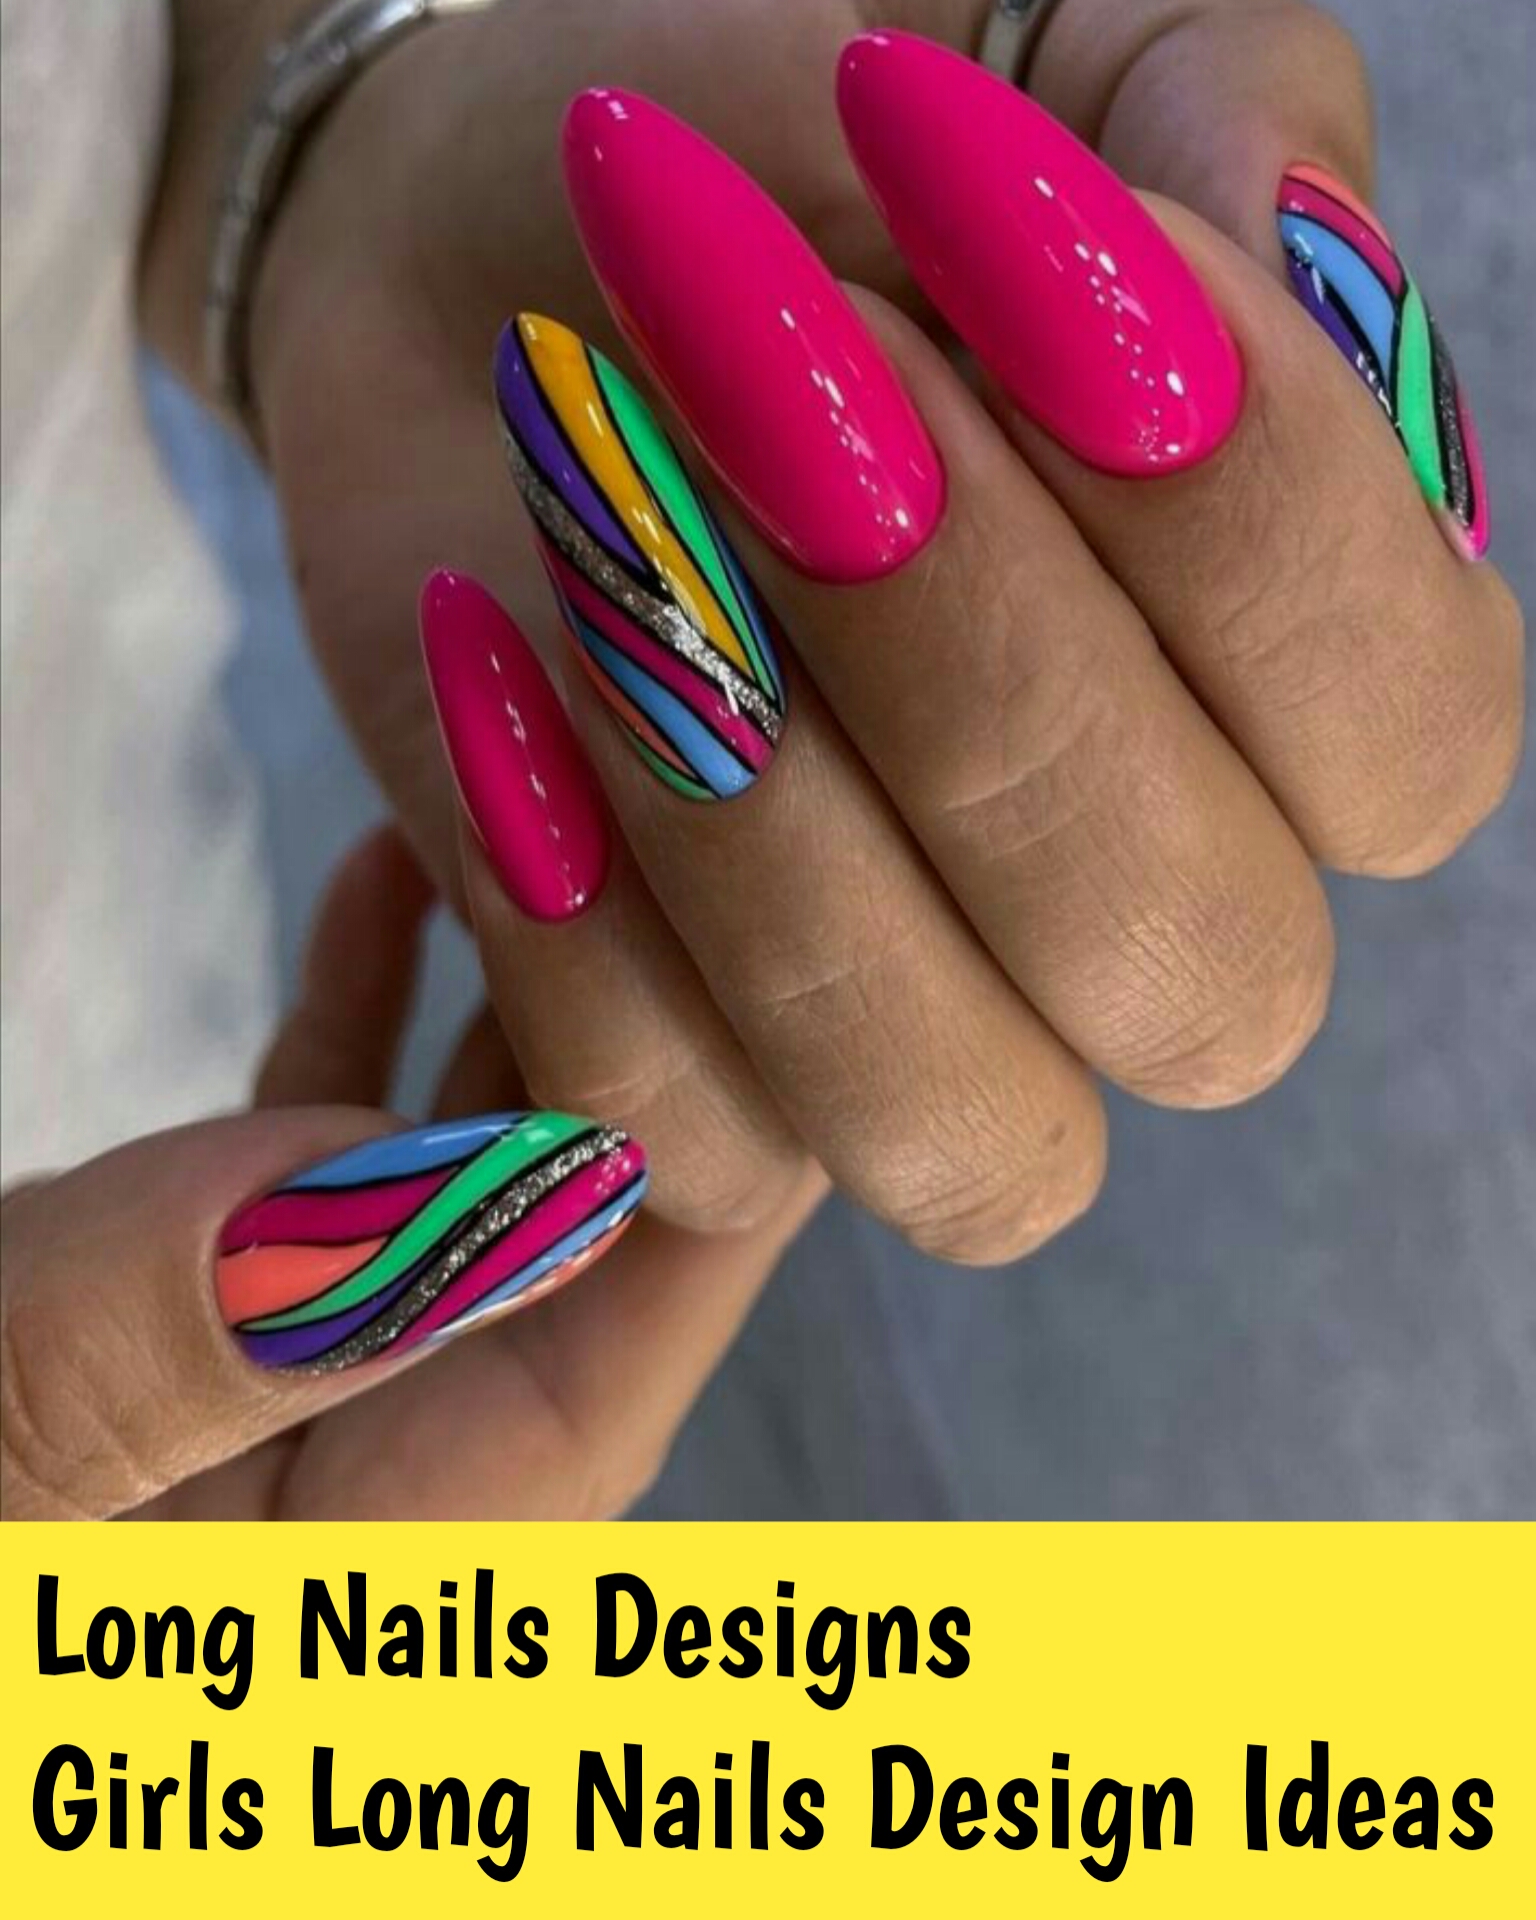 Long Nails Designs | Girls Long Nails Design Ideas